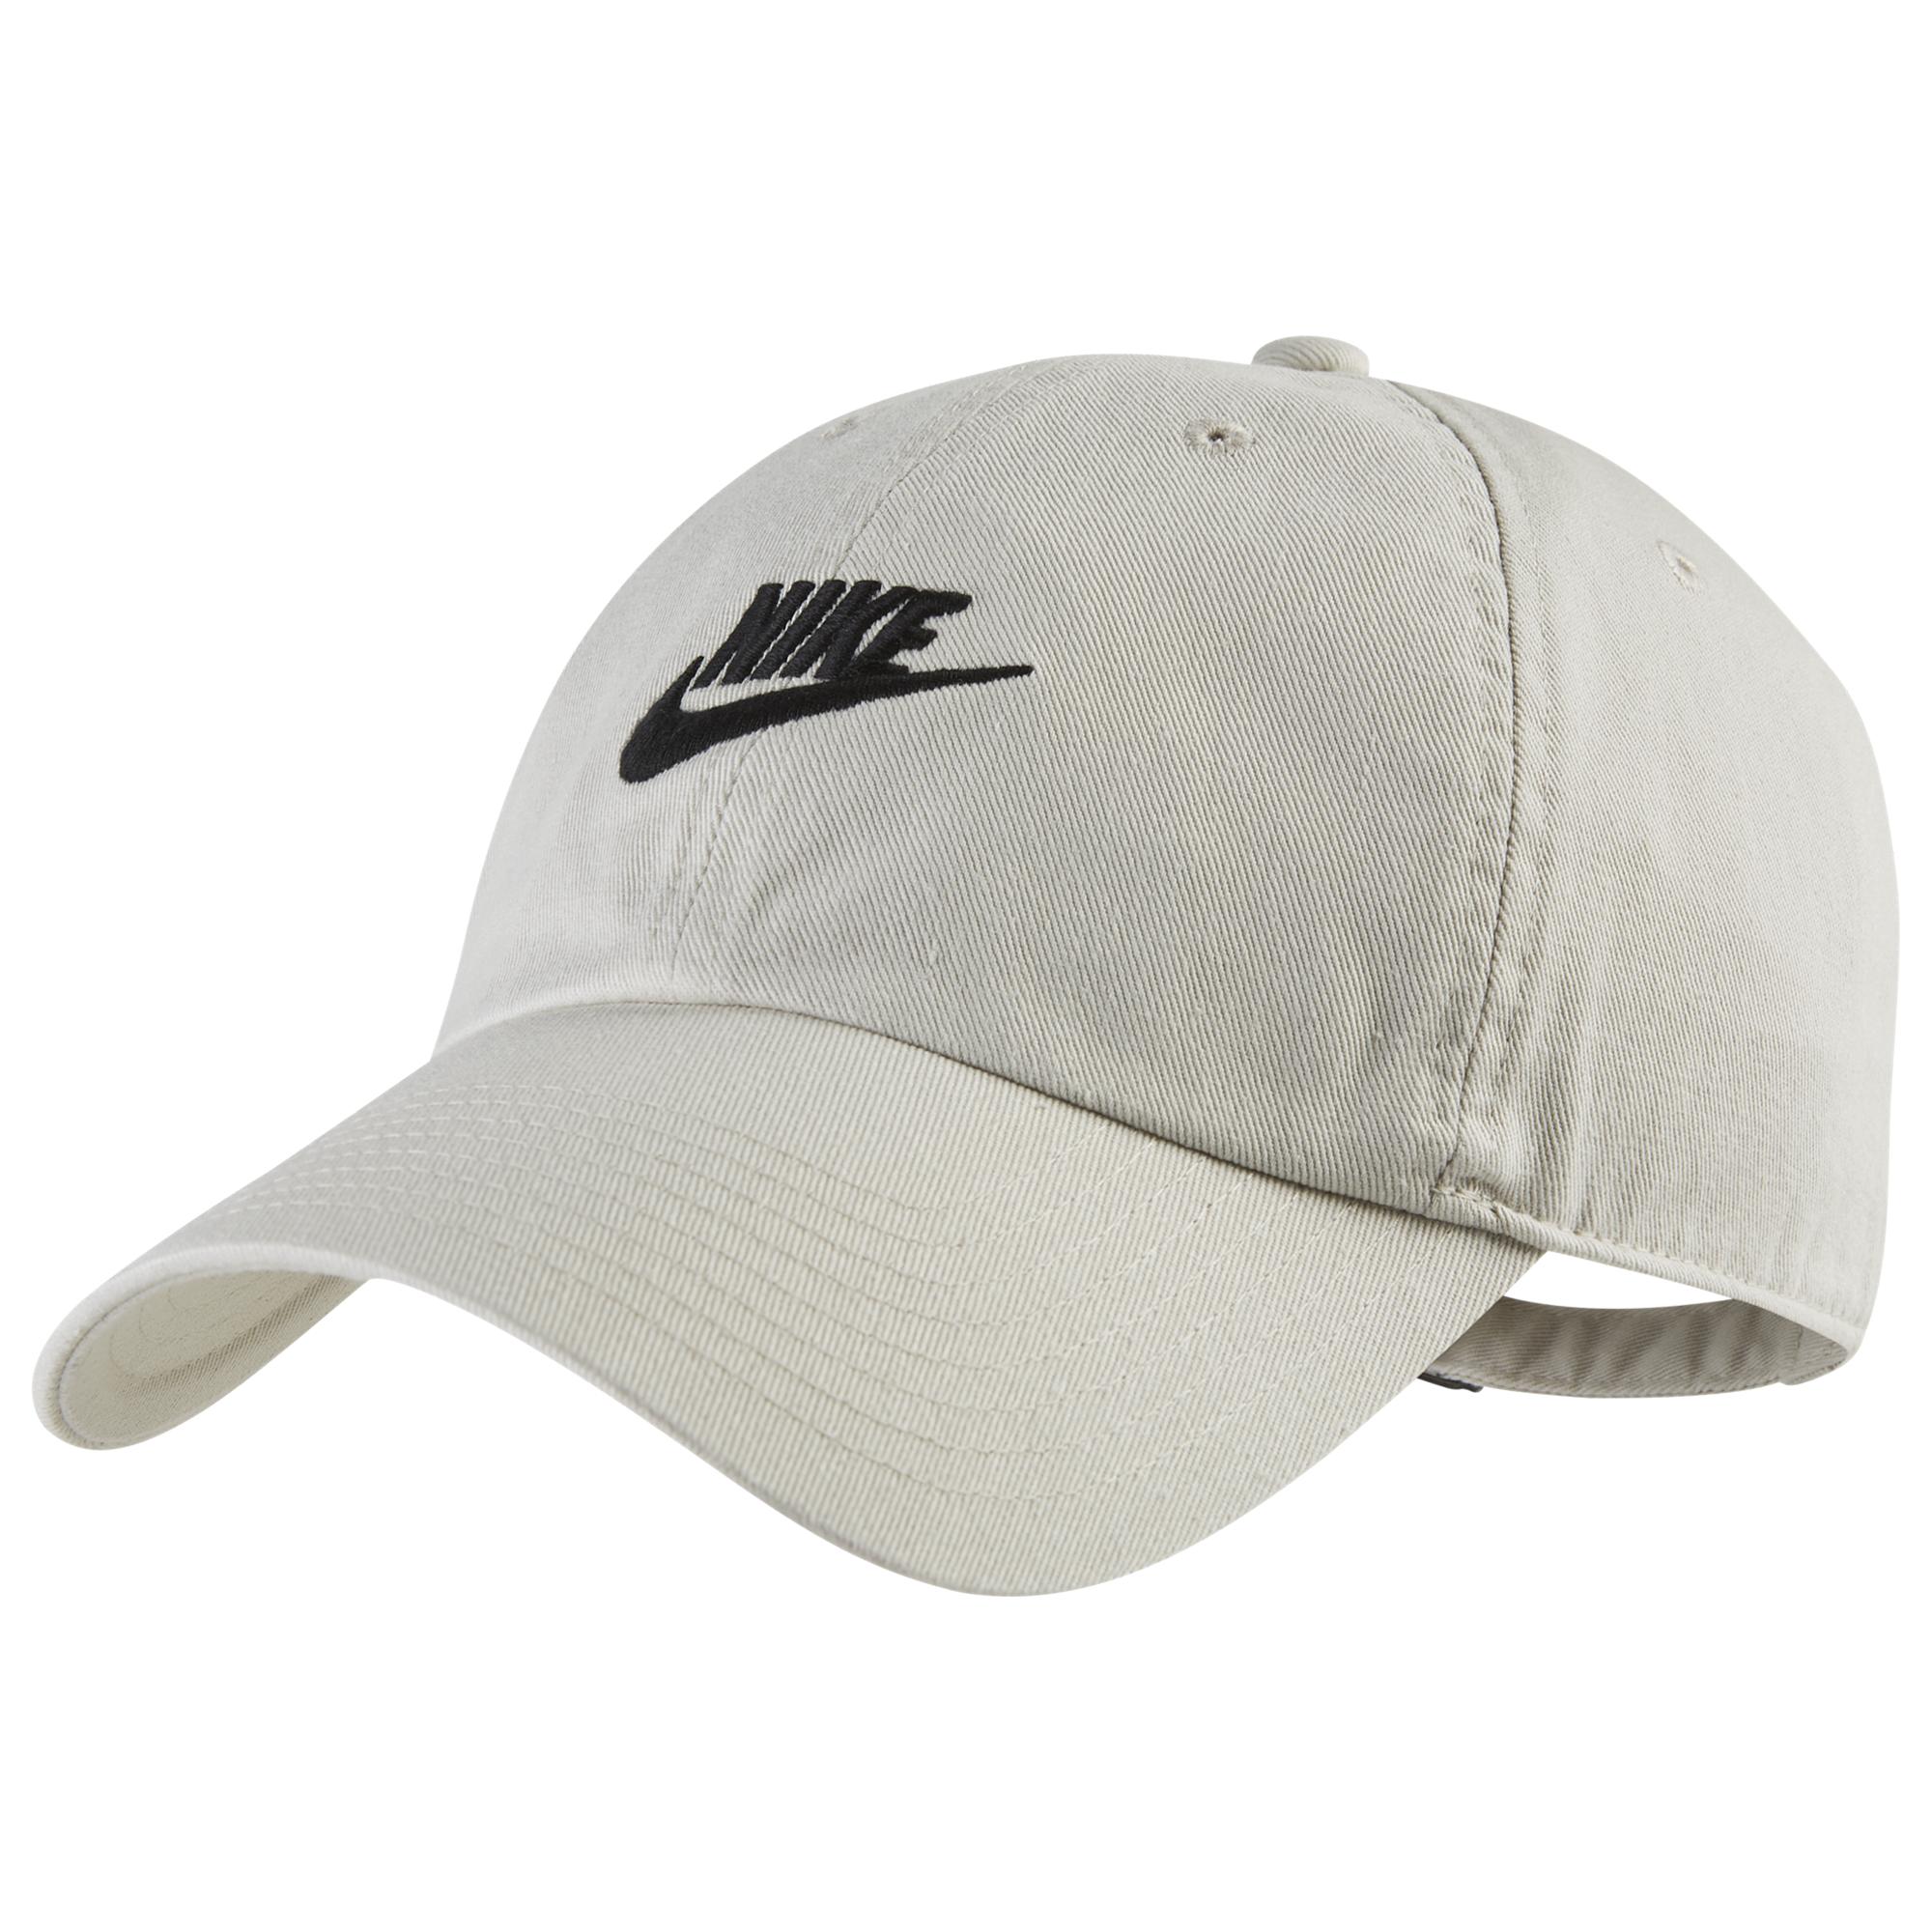 Nike Cotton H86 Futura Washed Cap in Light Bone/White (Gray) for Men - Lyst